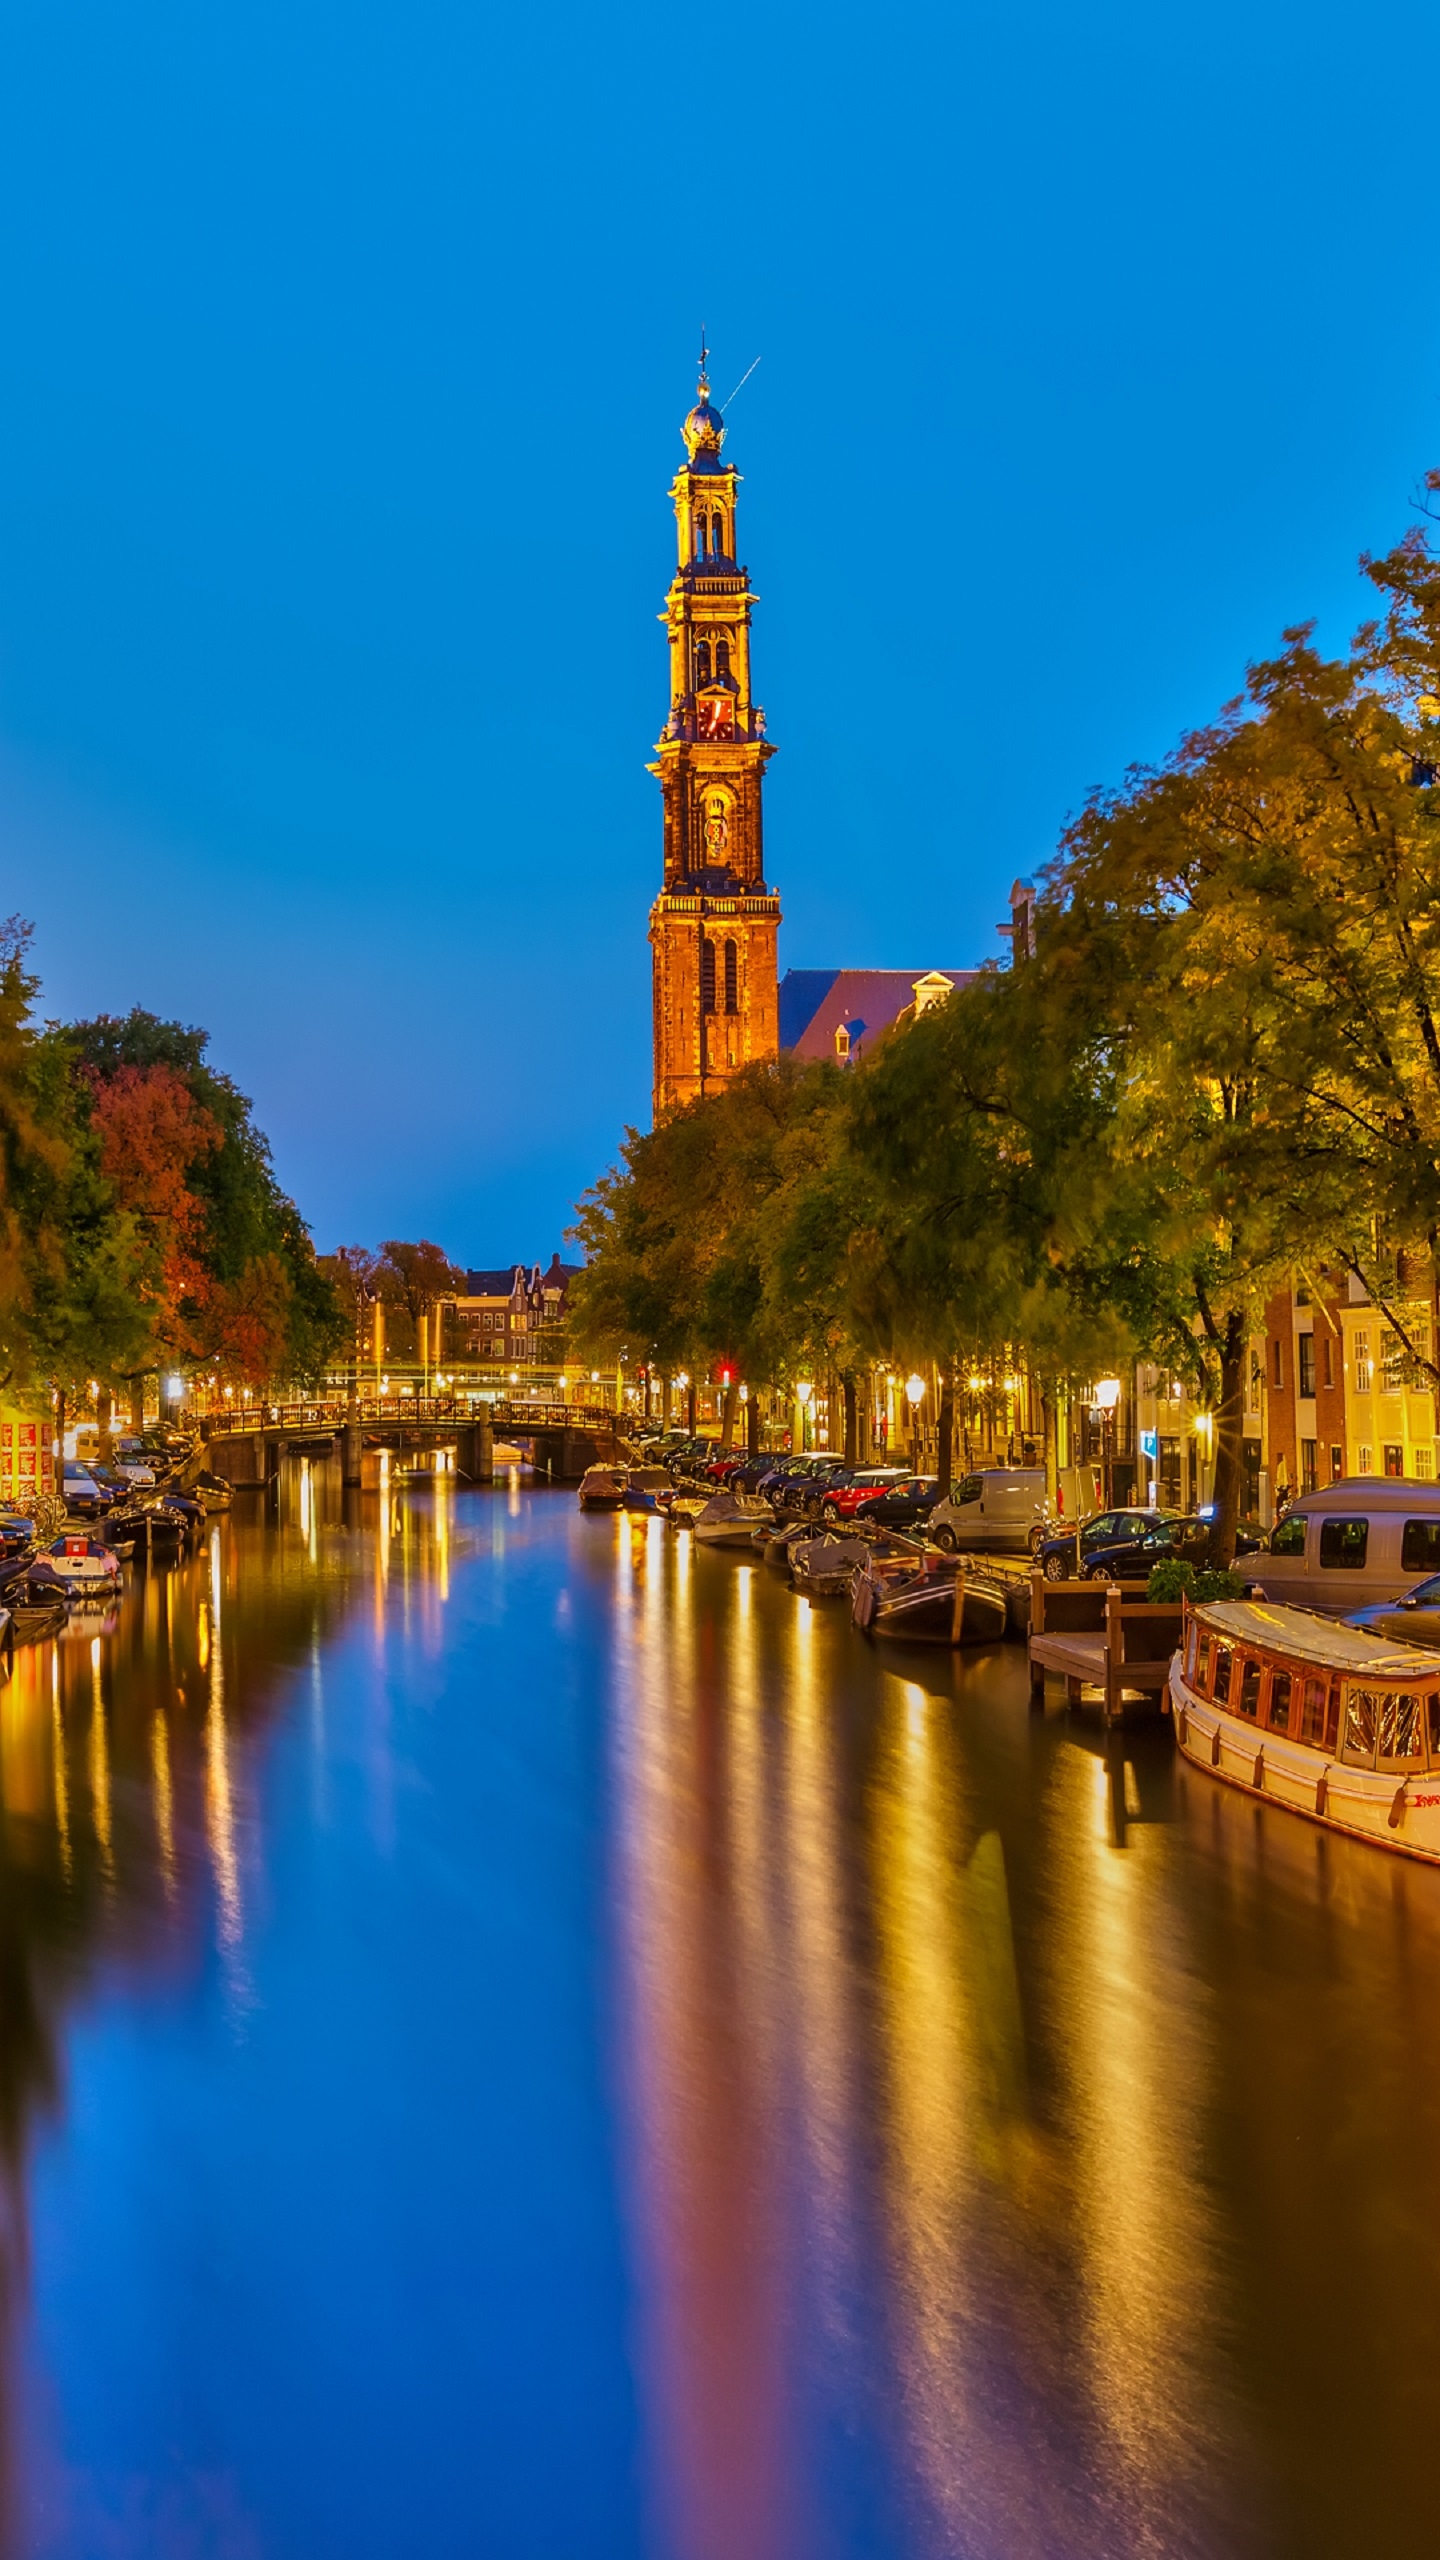 Amsterdam Netherlands for Samsung S7 & S7 Edge resolution